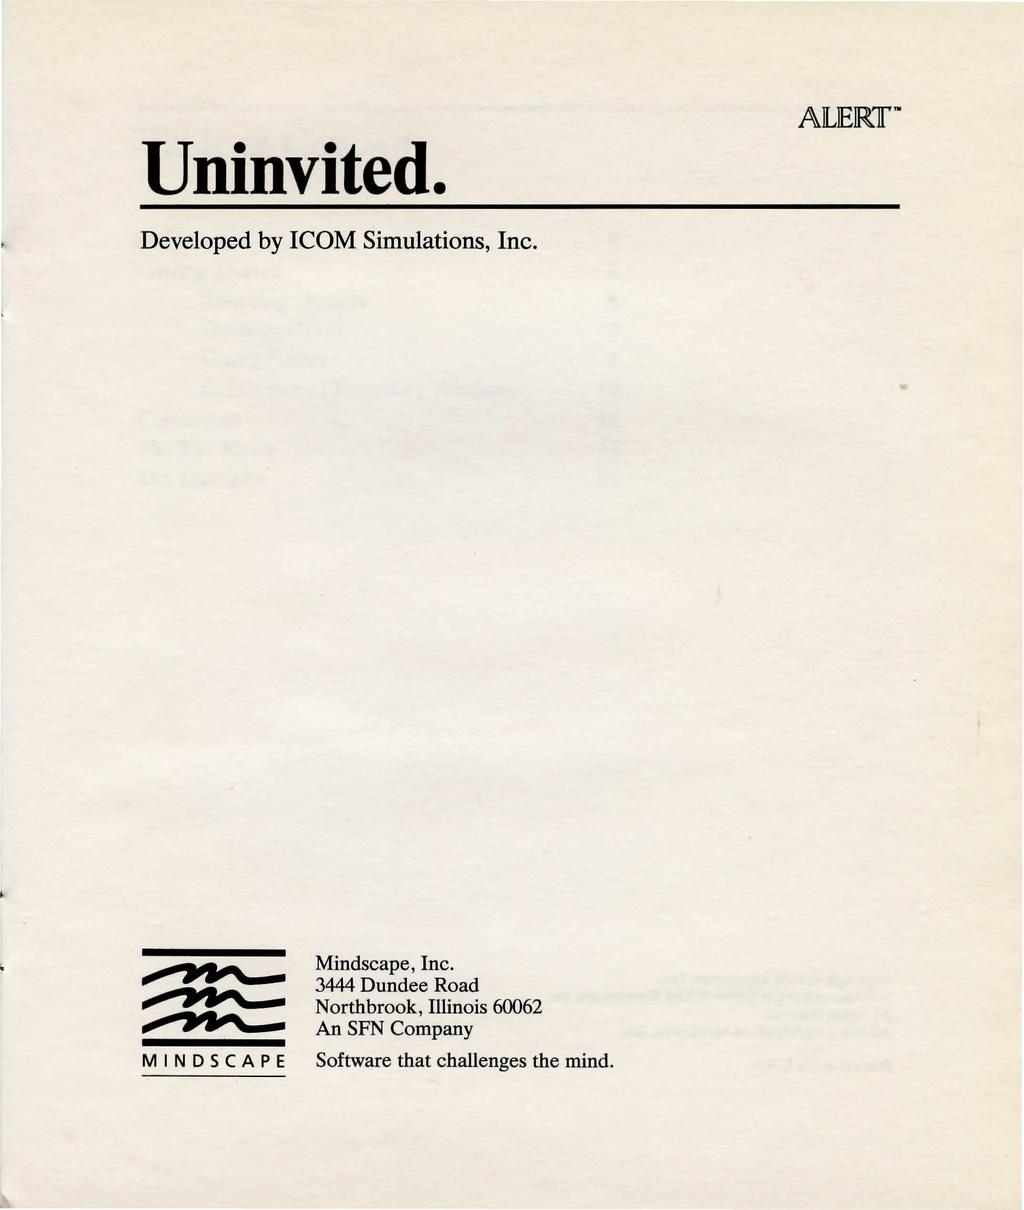 Uninvited. AllERT~ Developed by ICOM Simulations, Inc. MINDSCAPE Mindscape, Inc.